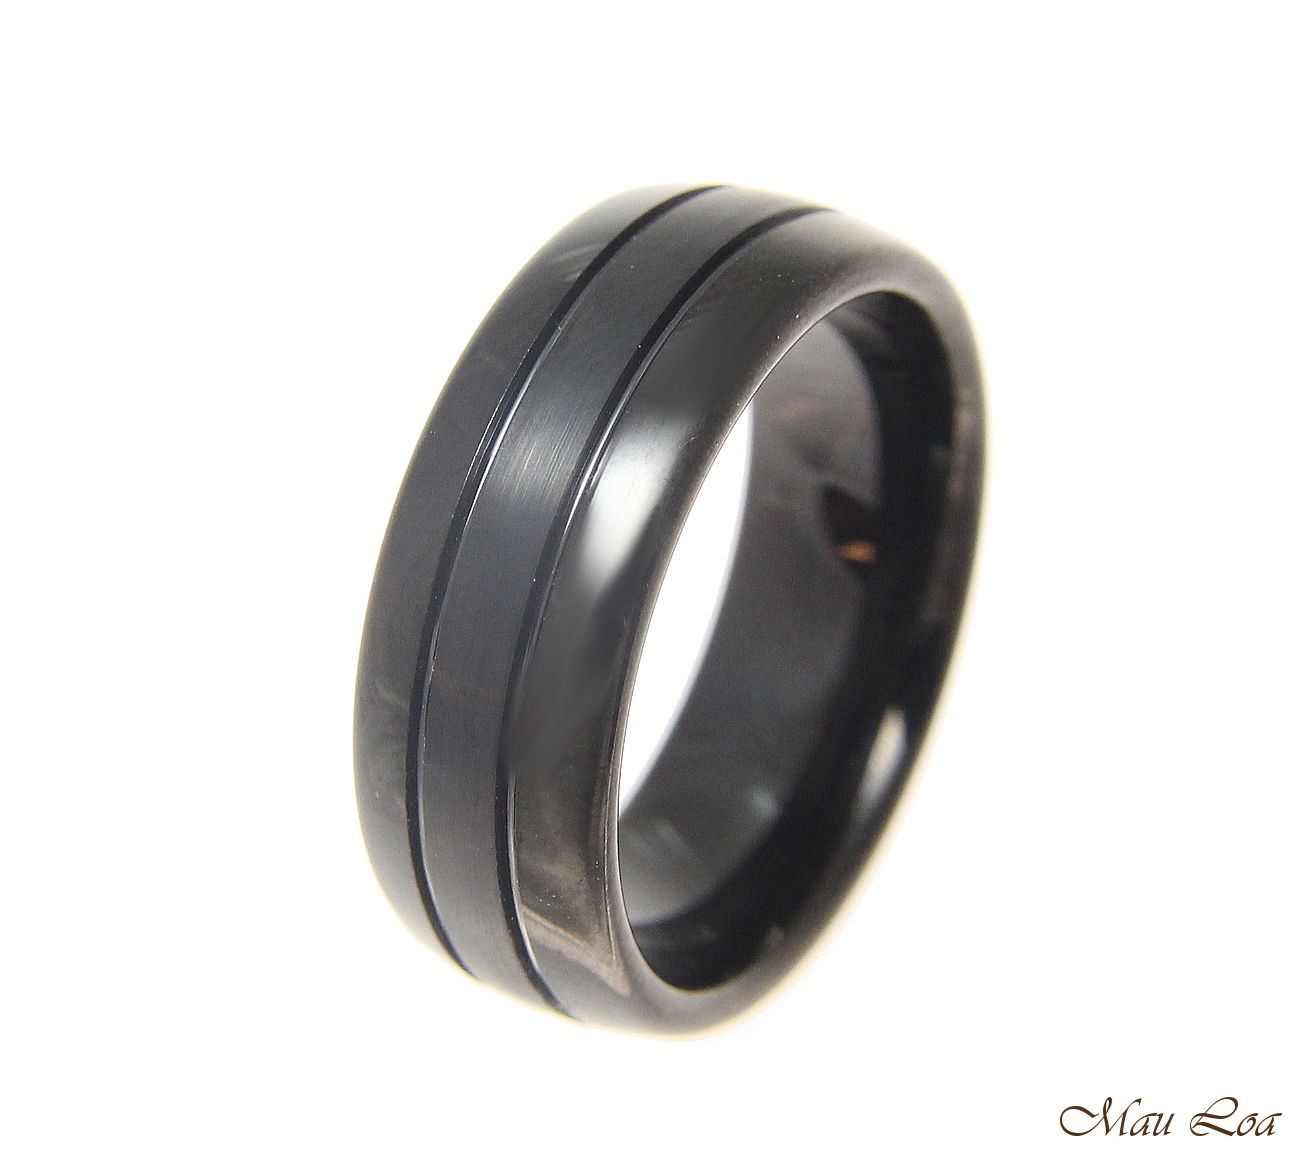 Tungsten Black 8mm Wedding Band Men's Ring Comfort Fit Size 5-14